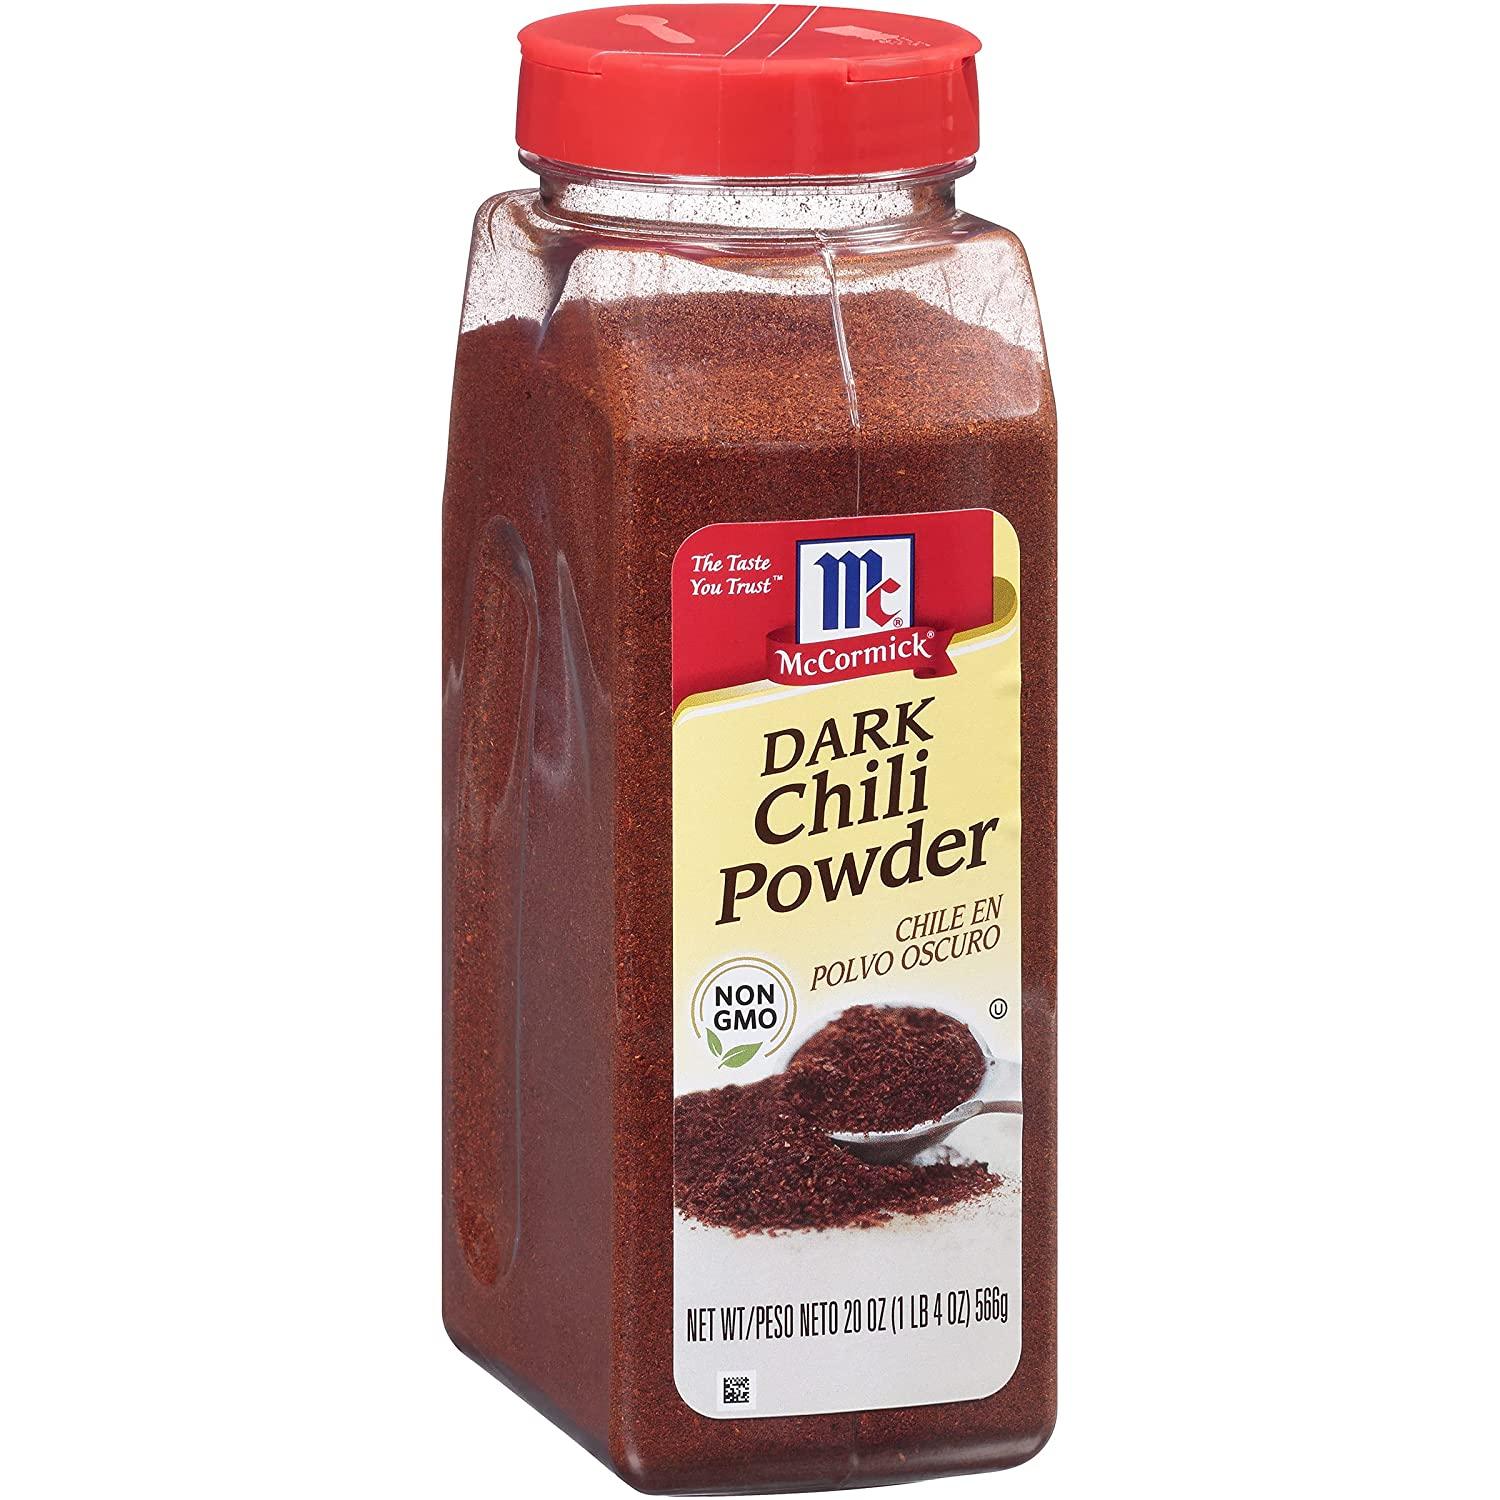 McCormick Dark Chili Powder for $5.49